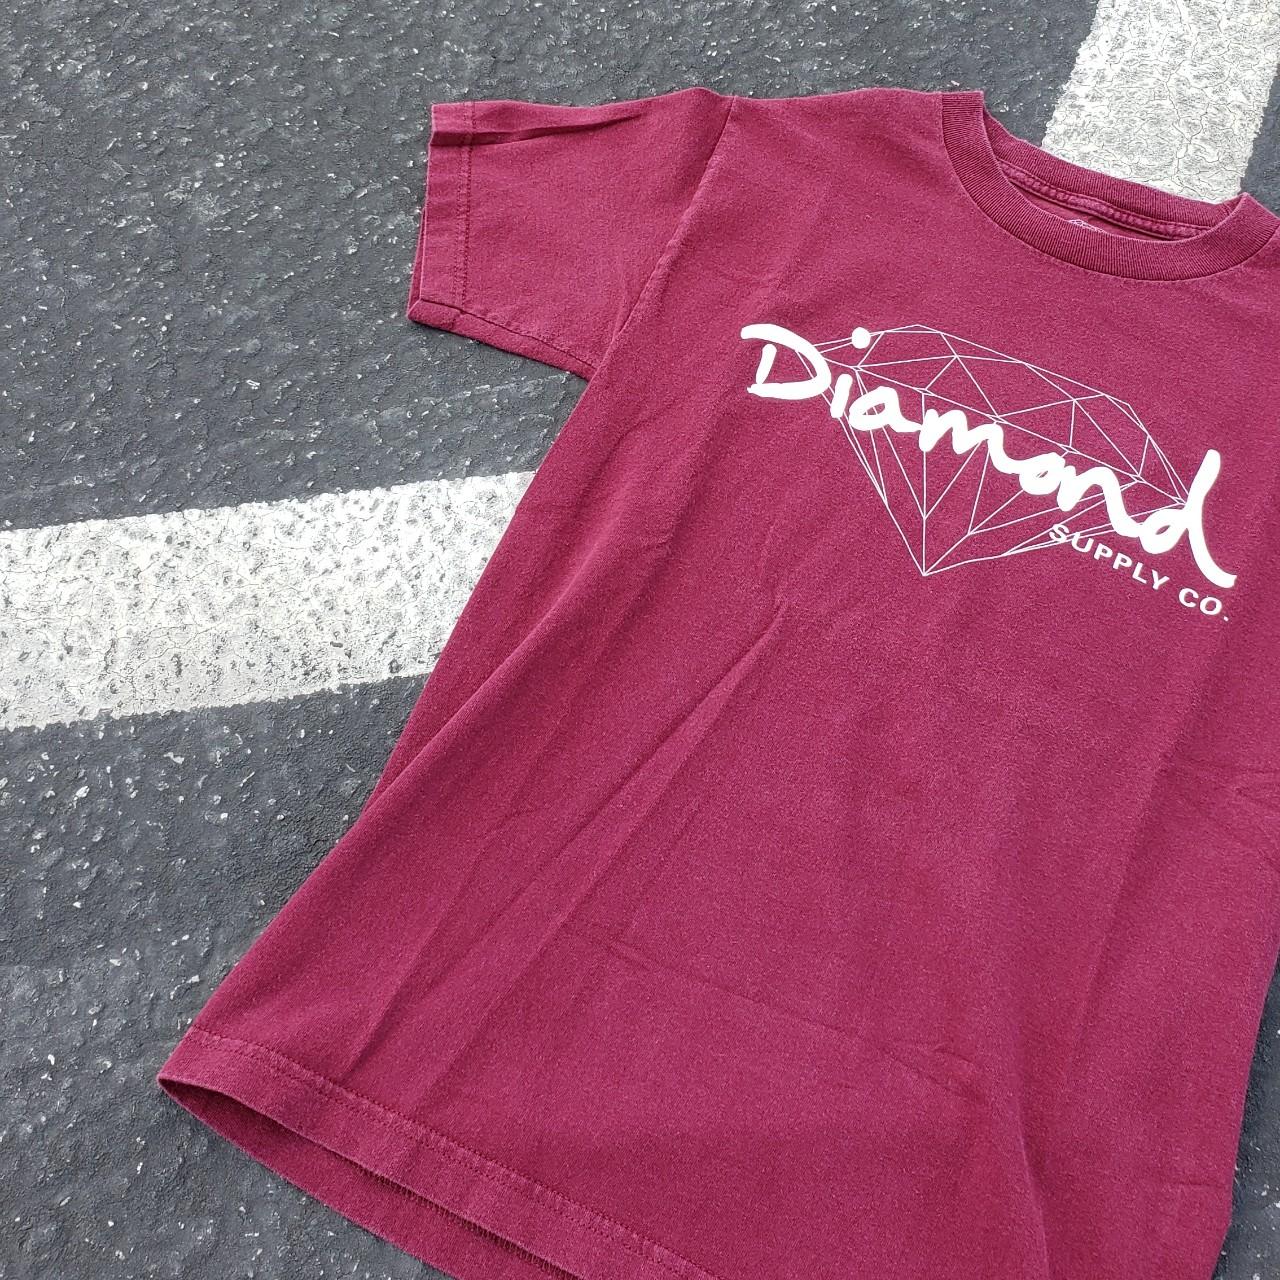 Diamond Supply Co. Men's Burgundy T-shirt